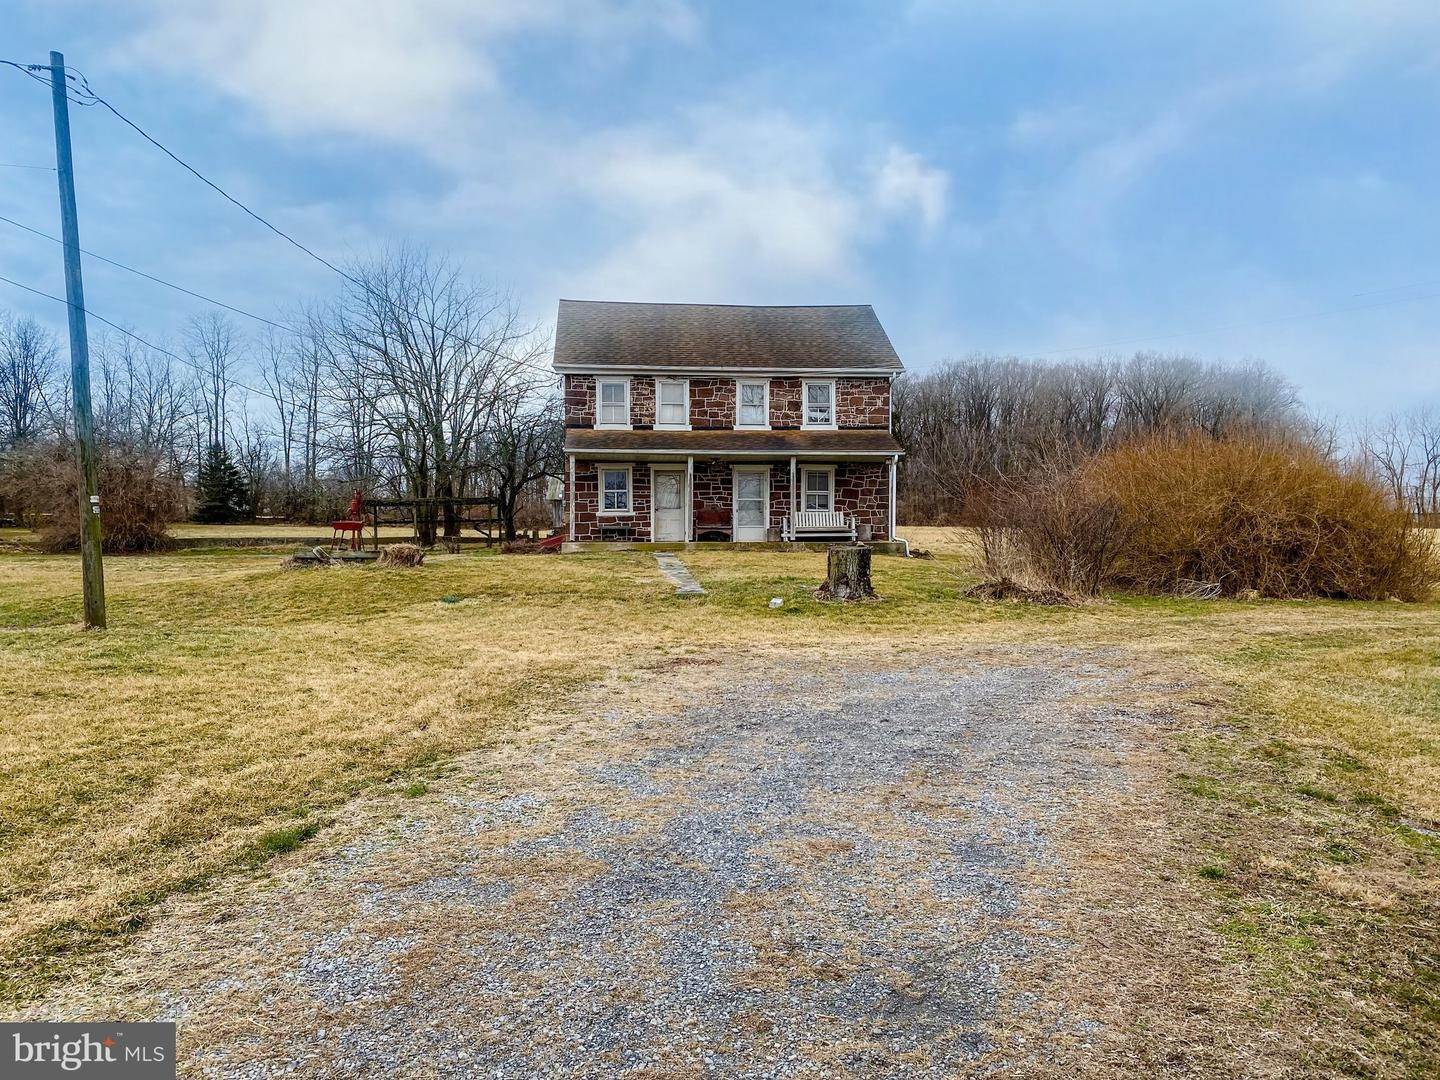 20. Land for Sale at 2101 KRAMER MILL Road Stevens, Pennsylvania 17578 United States